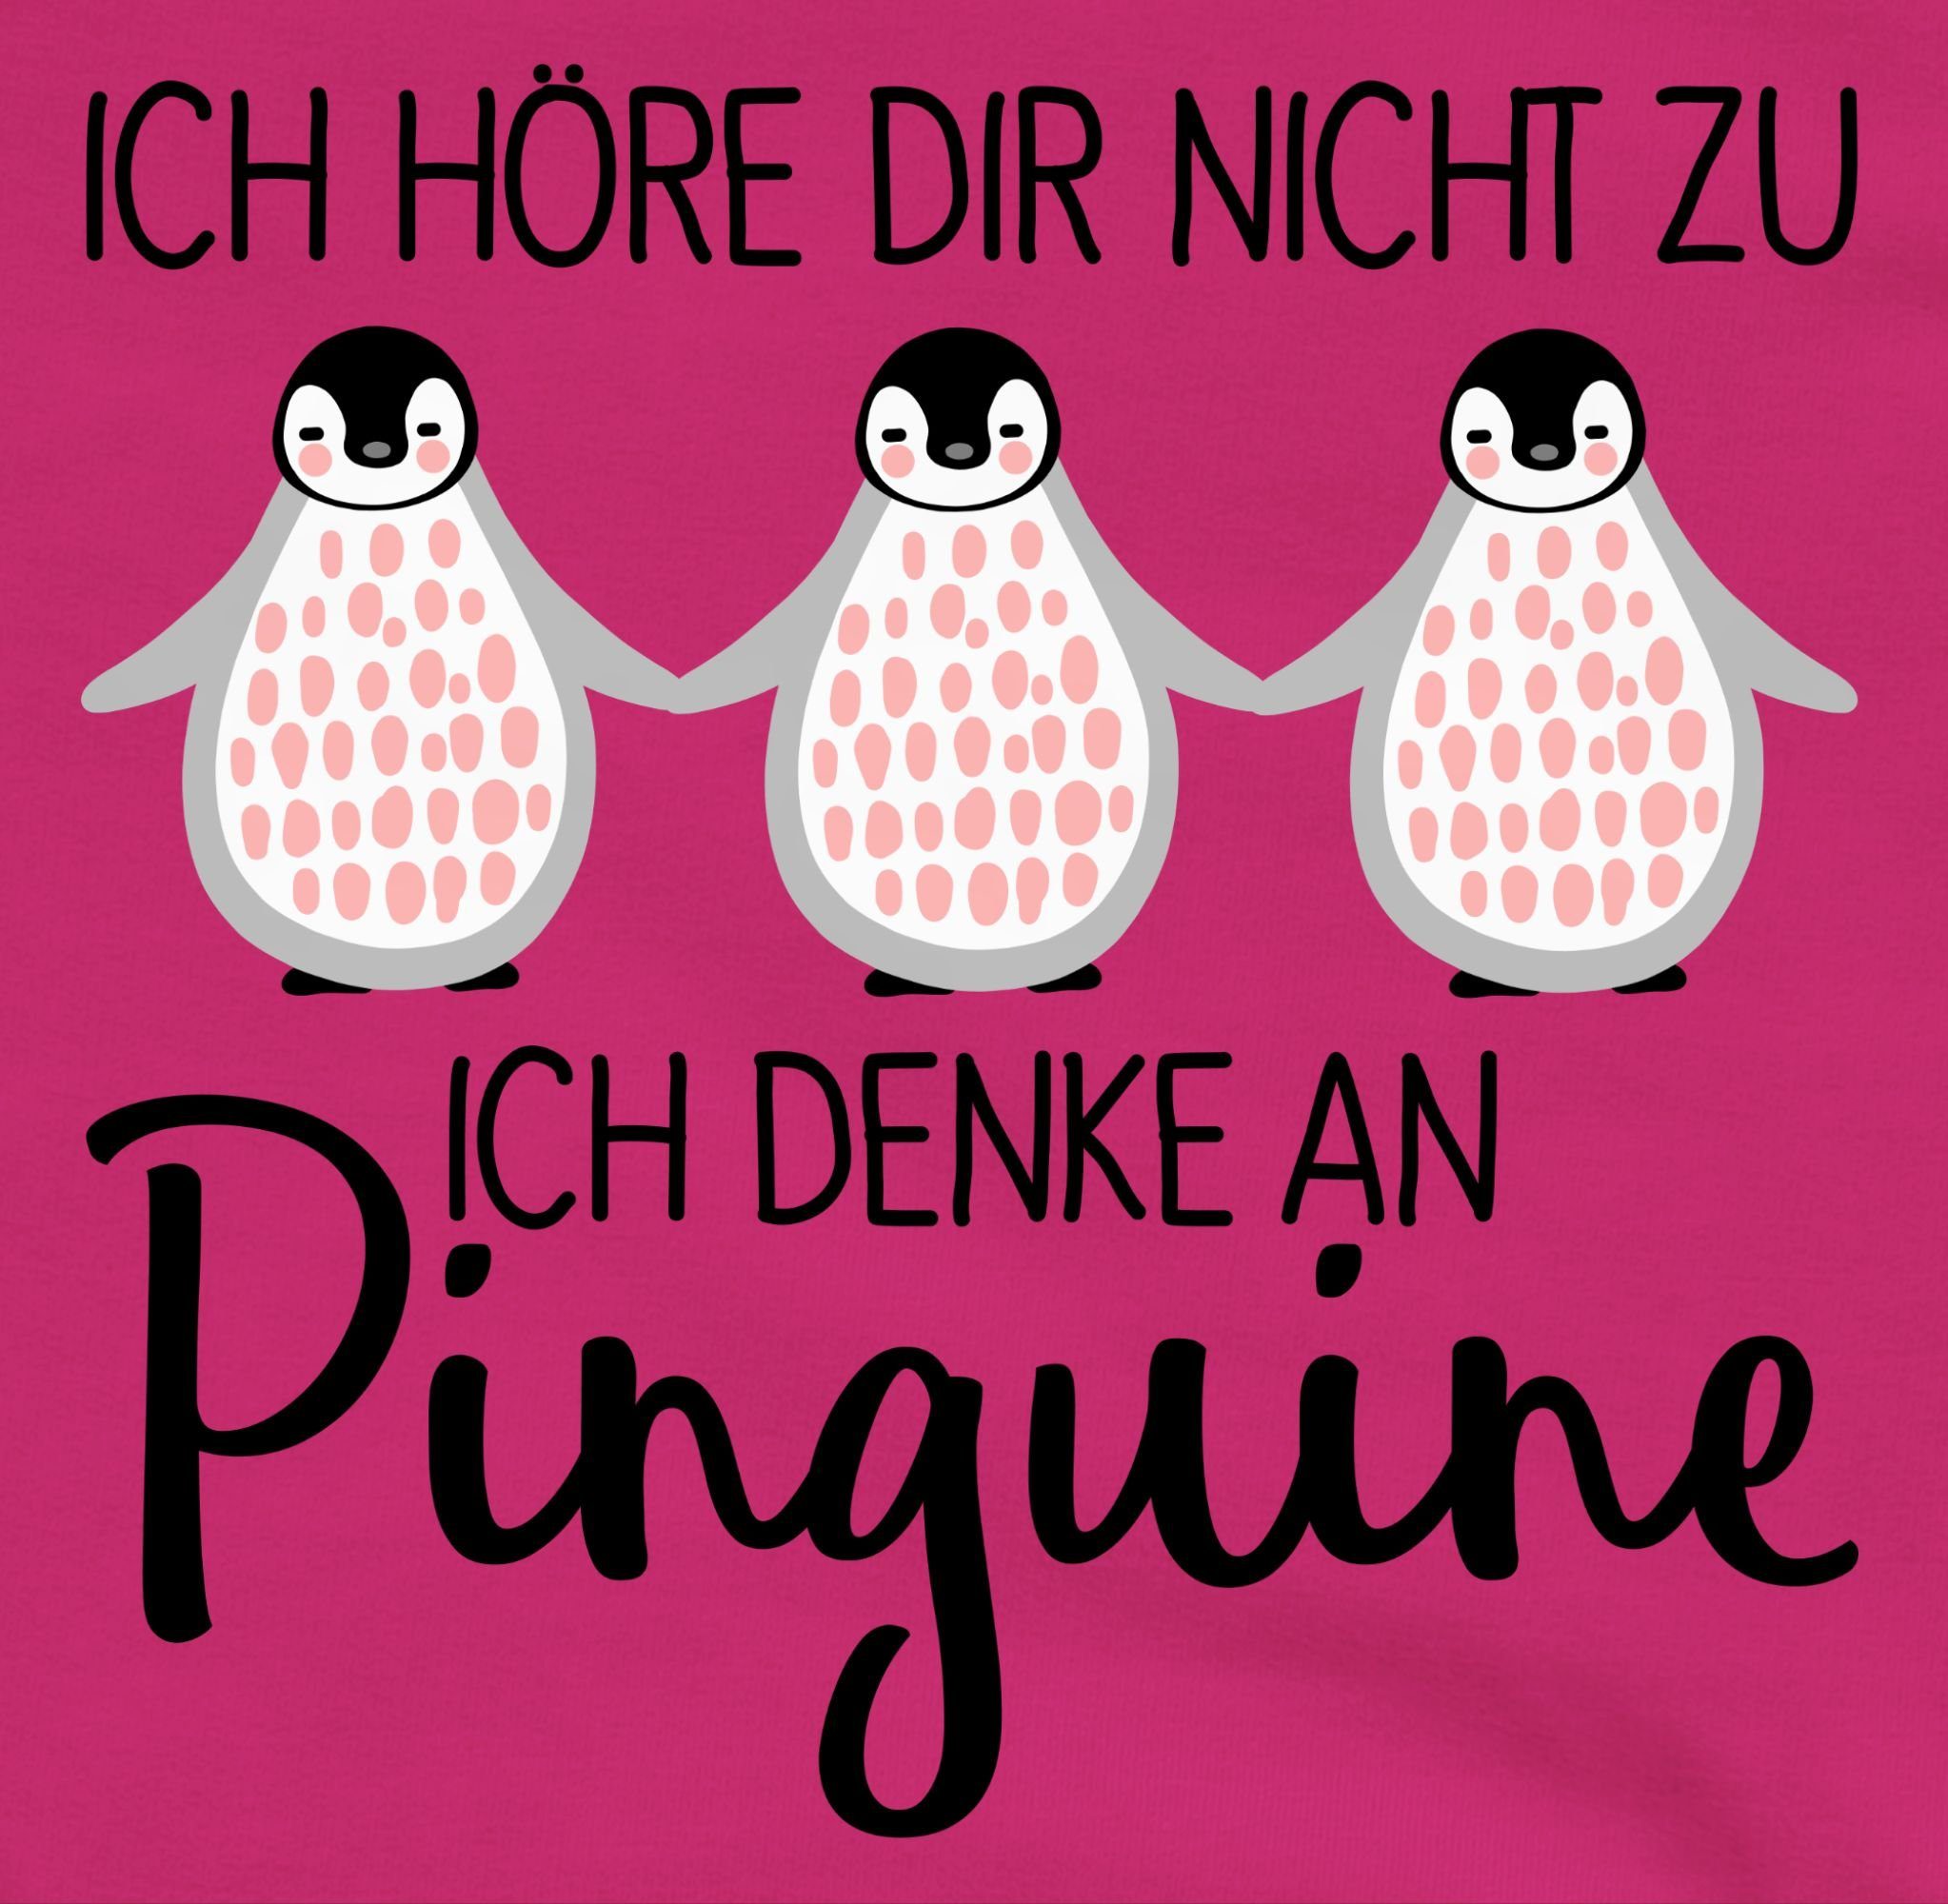 denke Animal Pinguine Fuchsia Print Shirtracer Ich 2 Sweatshirt an Tiermotiv